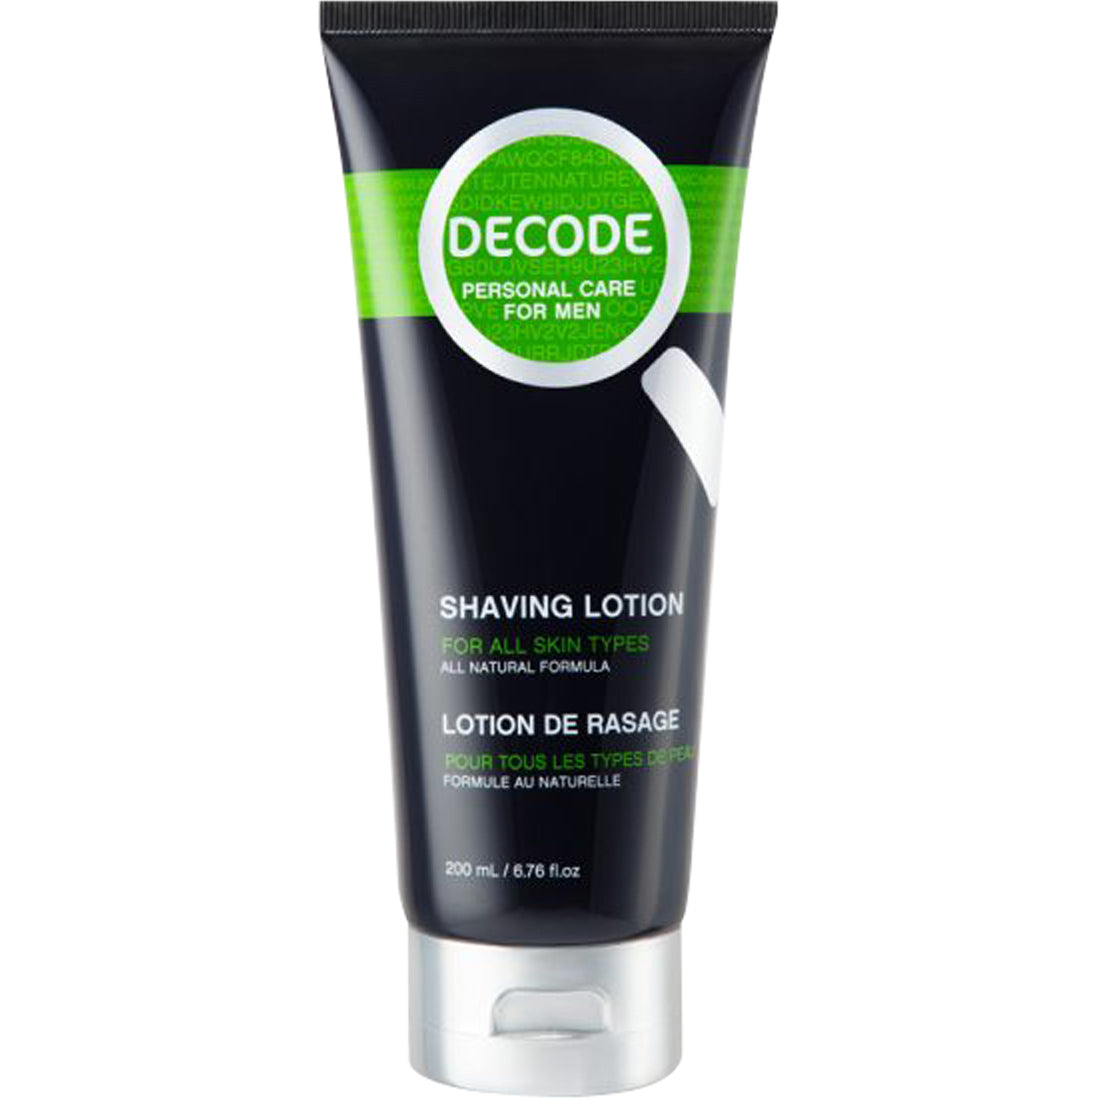 Decode Shaving Lotion, 200ml